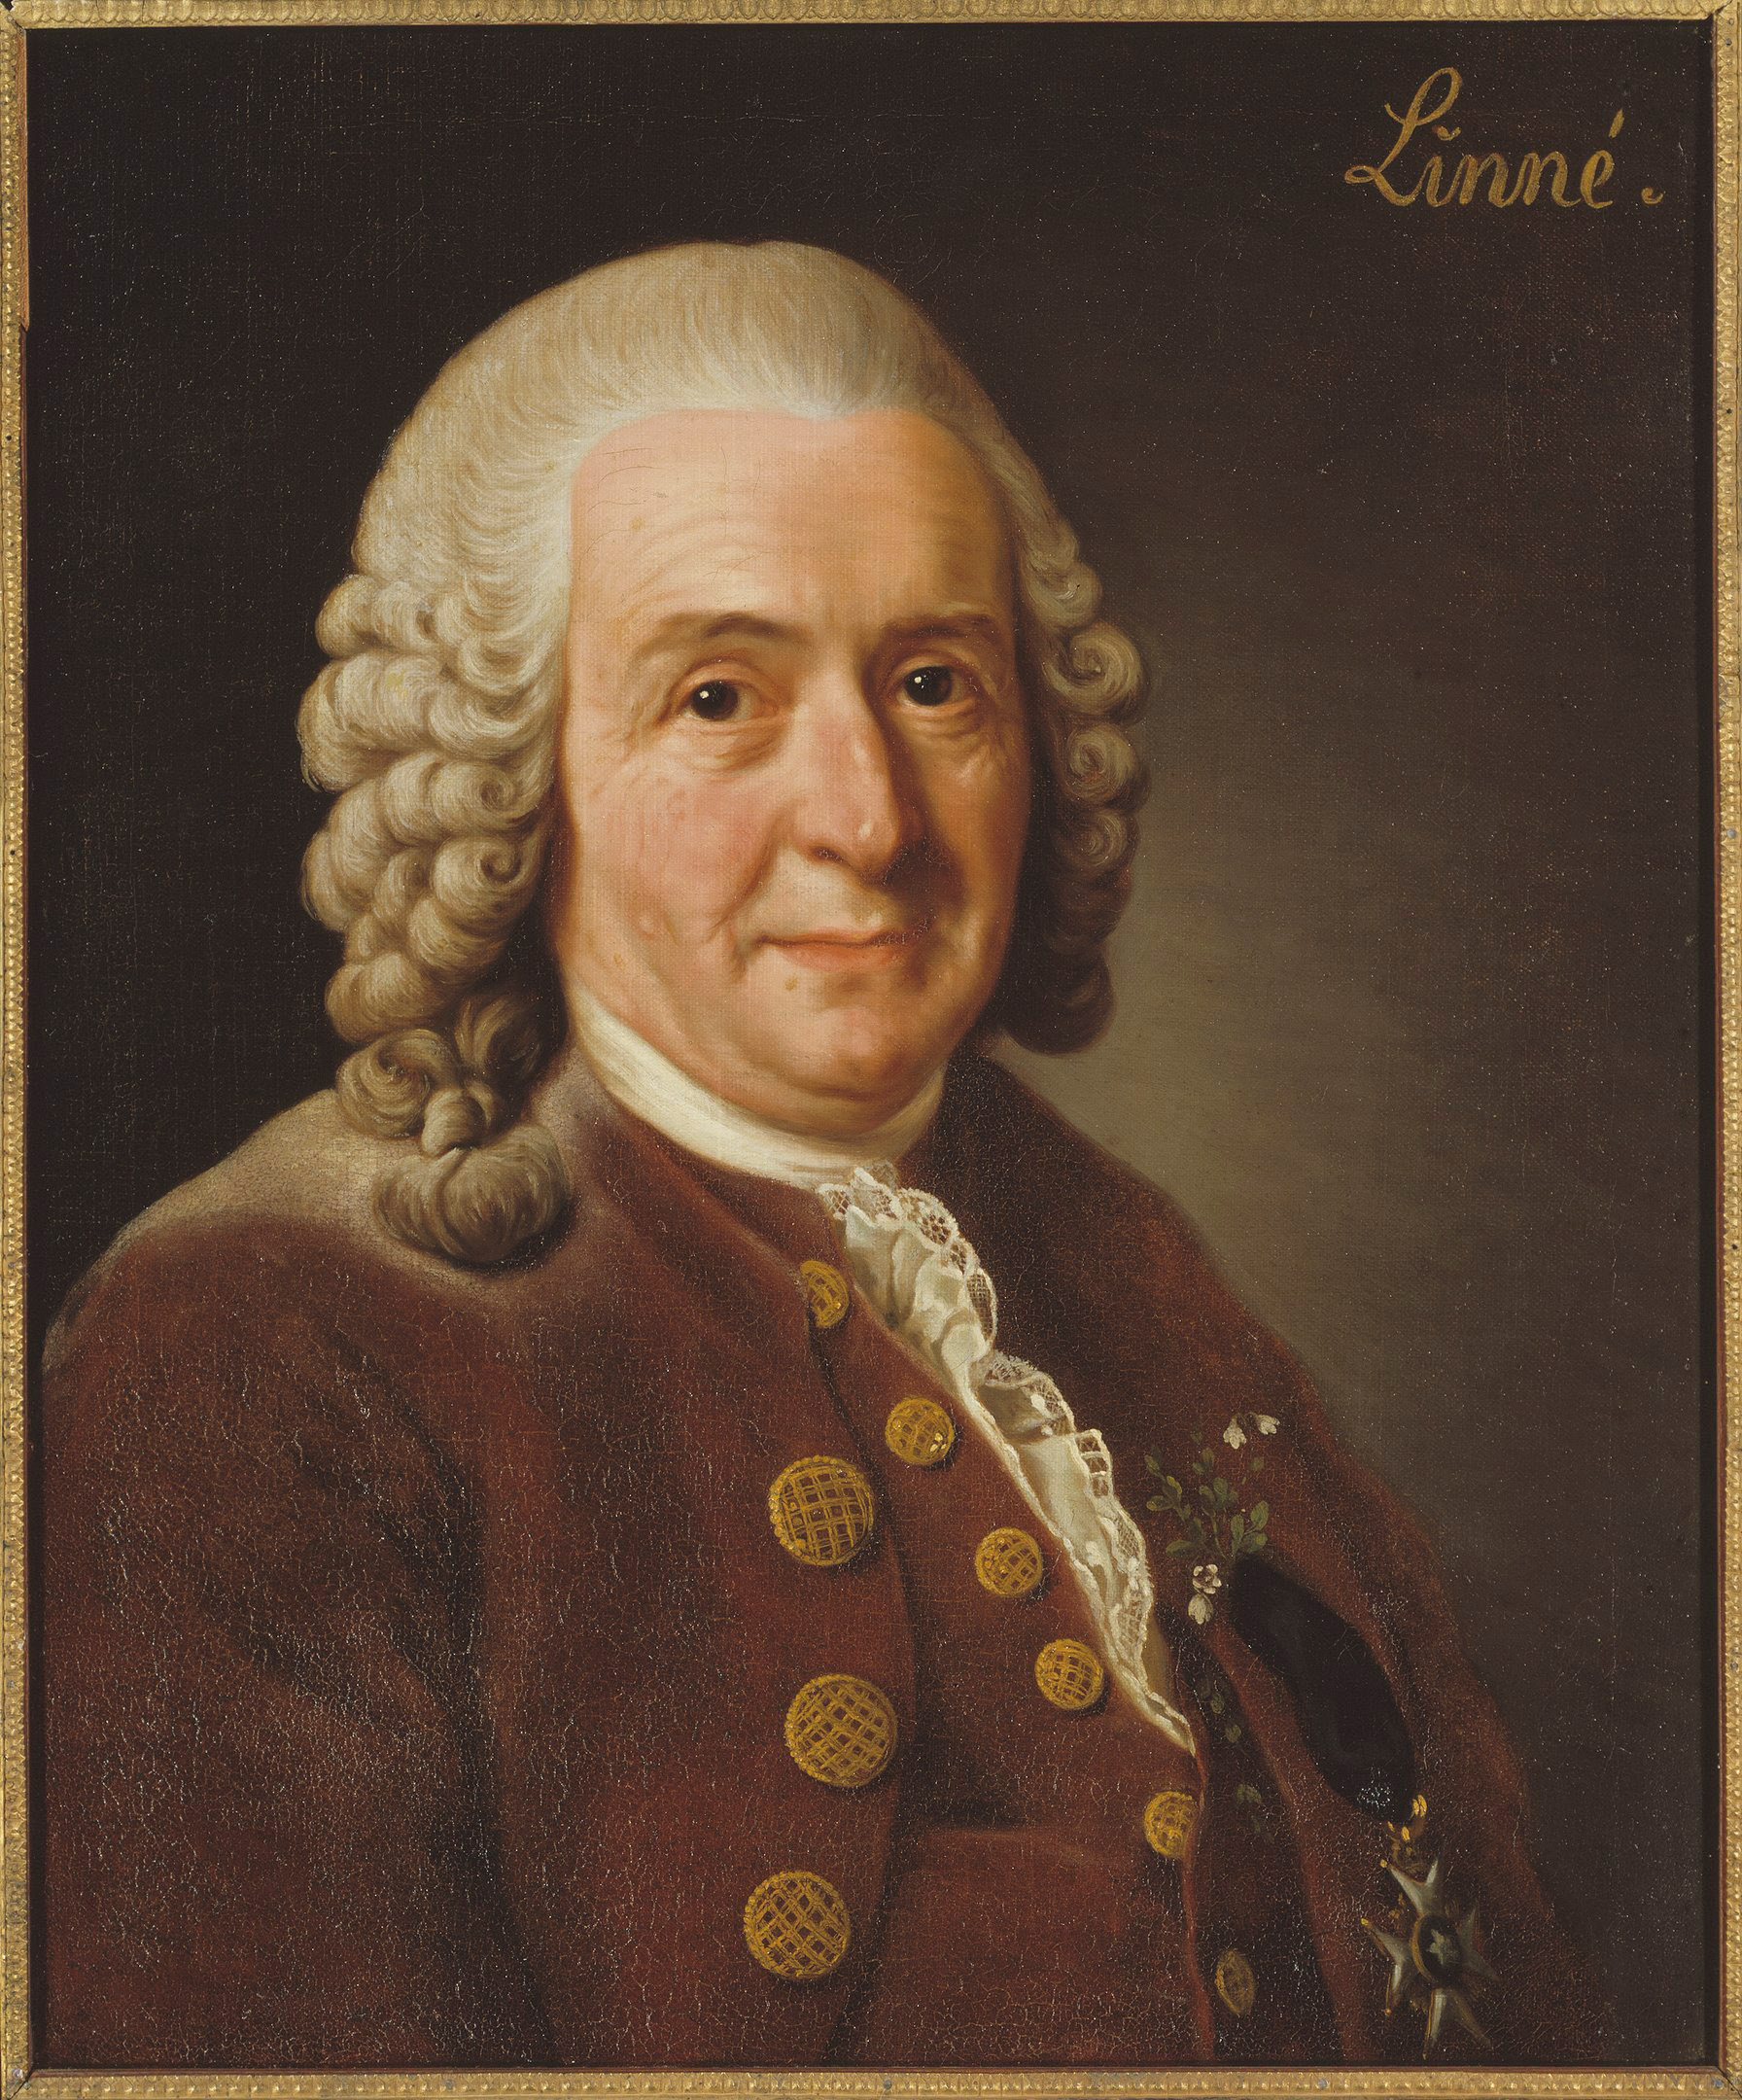 Figure 1: Carl Linnaeus, by Alexander Roslin, 1775 (oil on canvas, Gripsholm Castle).